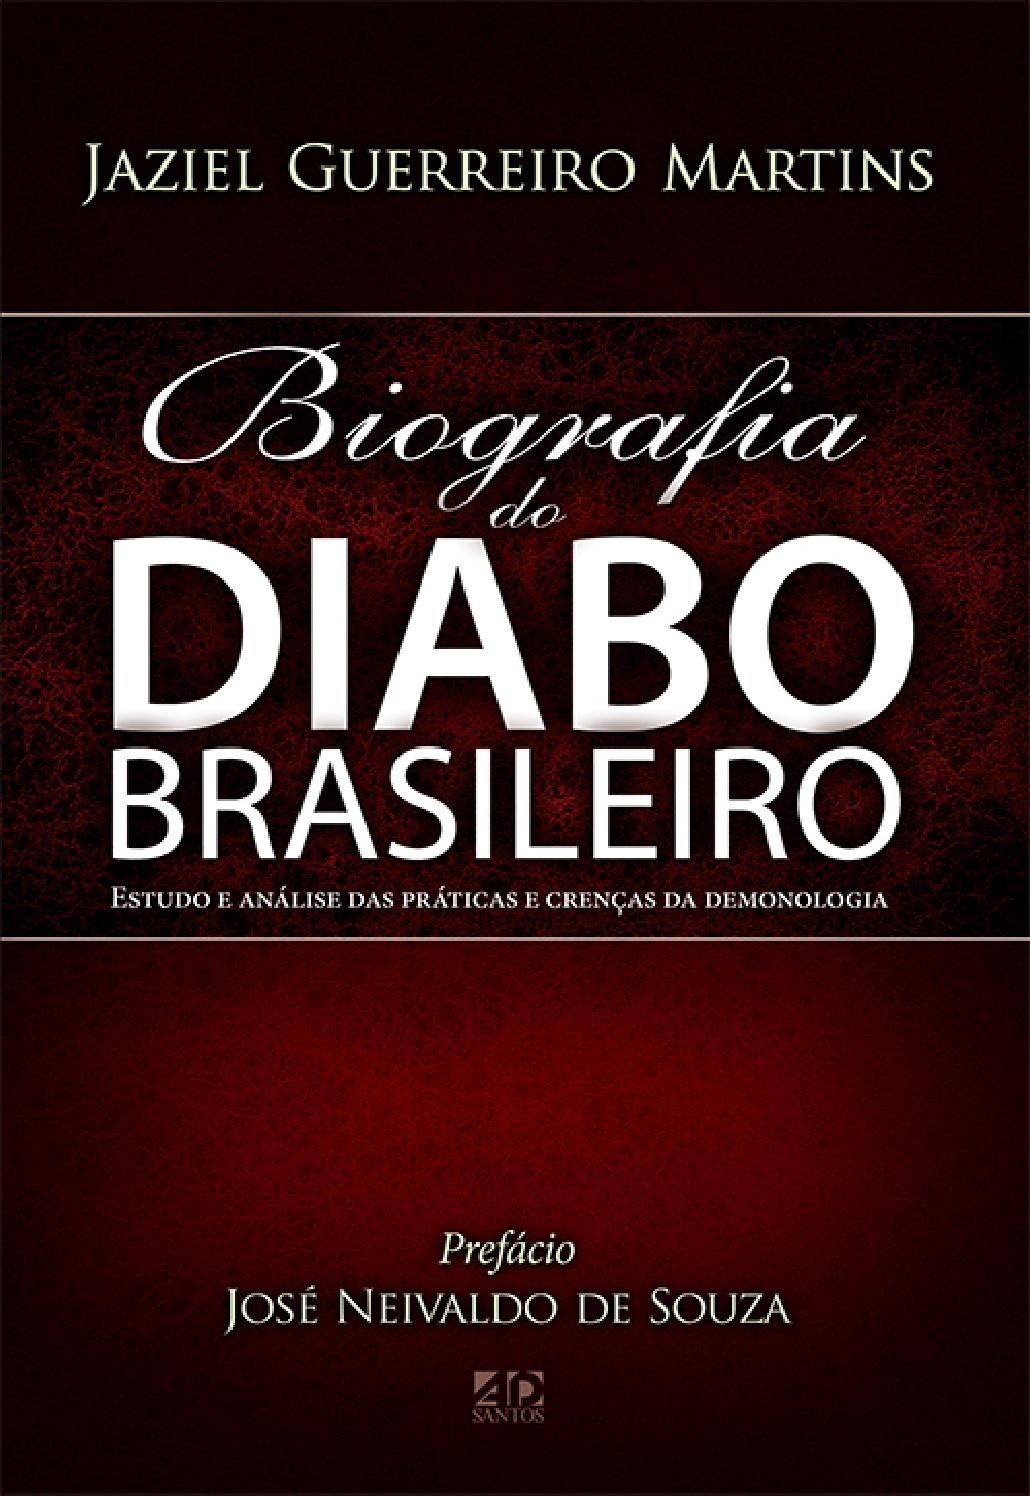 Biografia do diabo Brasileiro | Jaziel Guerreiro Martins